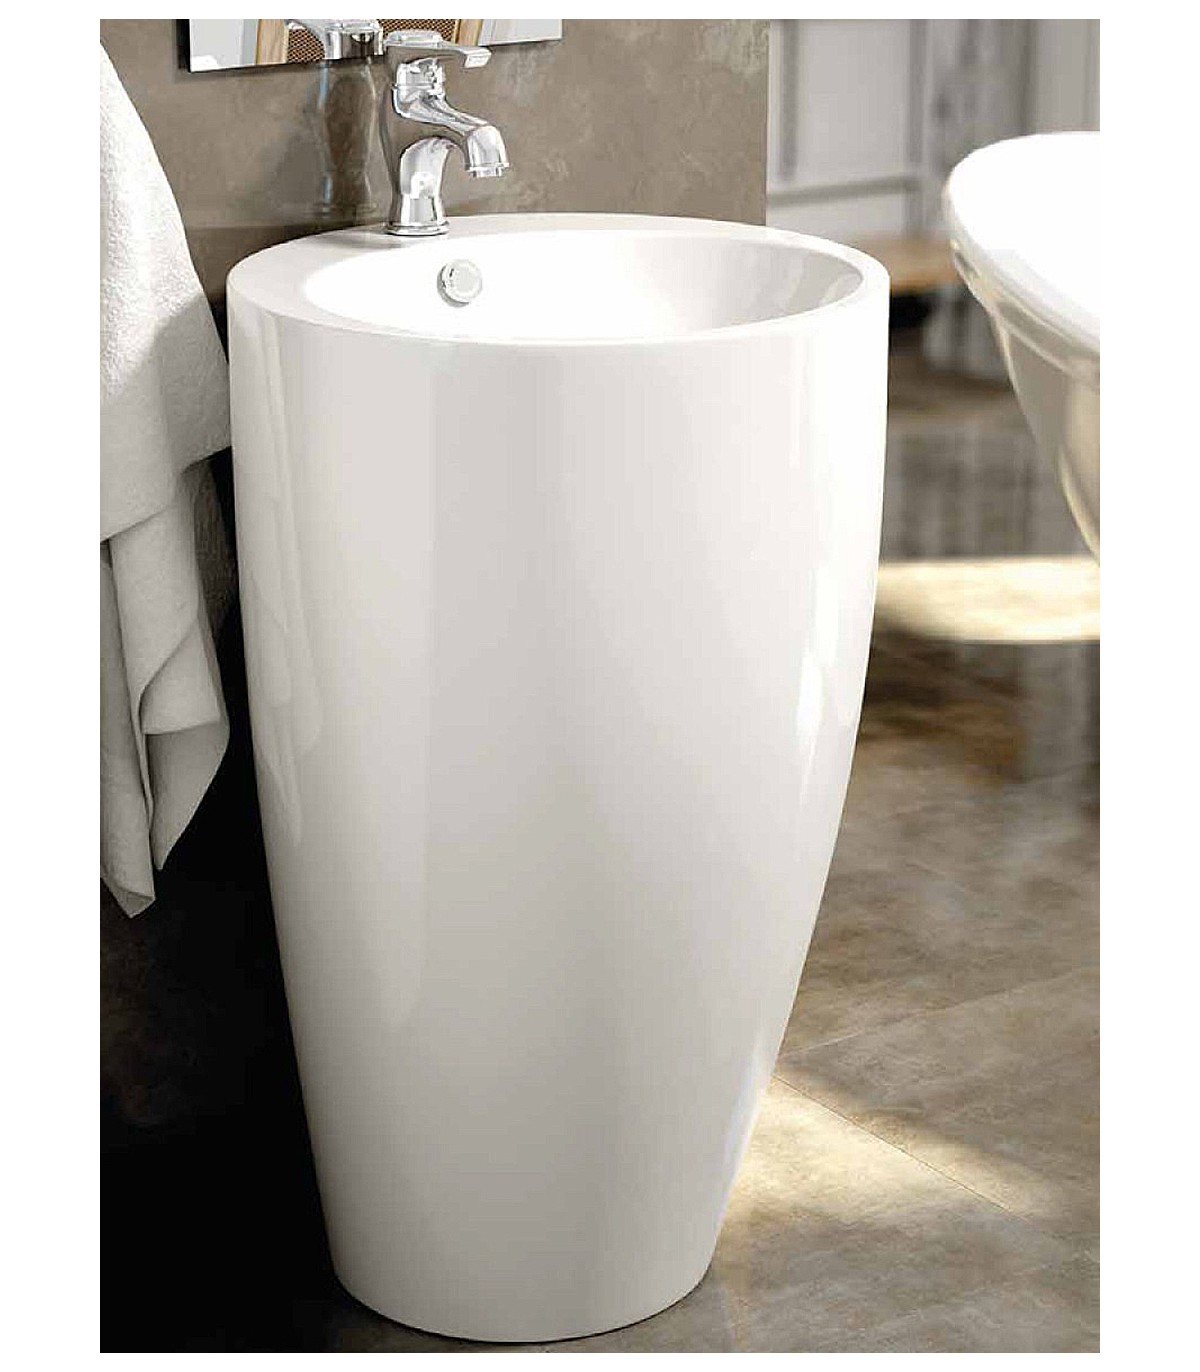 Lavabo sobre encimera: Art&bath, furnas lavabo sobre encimera porcelana  blanco brillo, blanco mate o negro mate